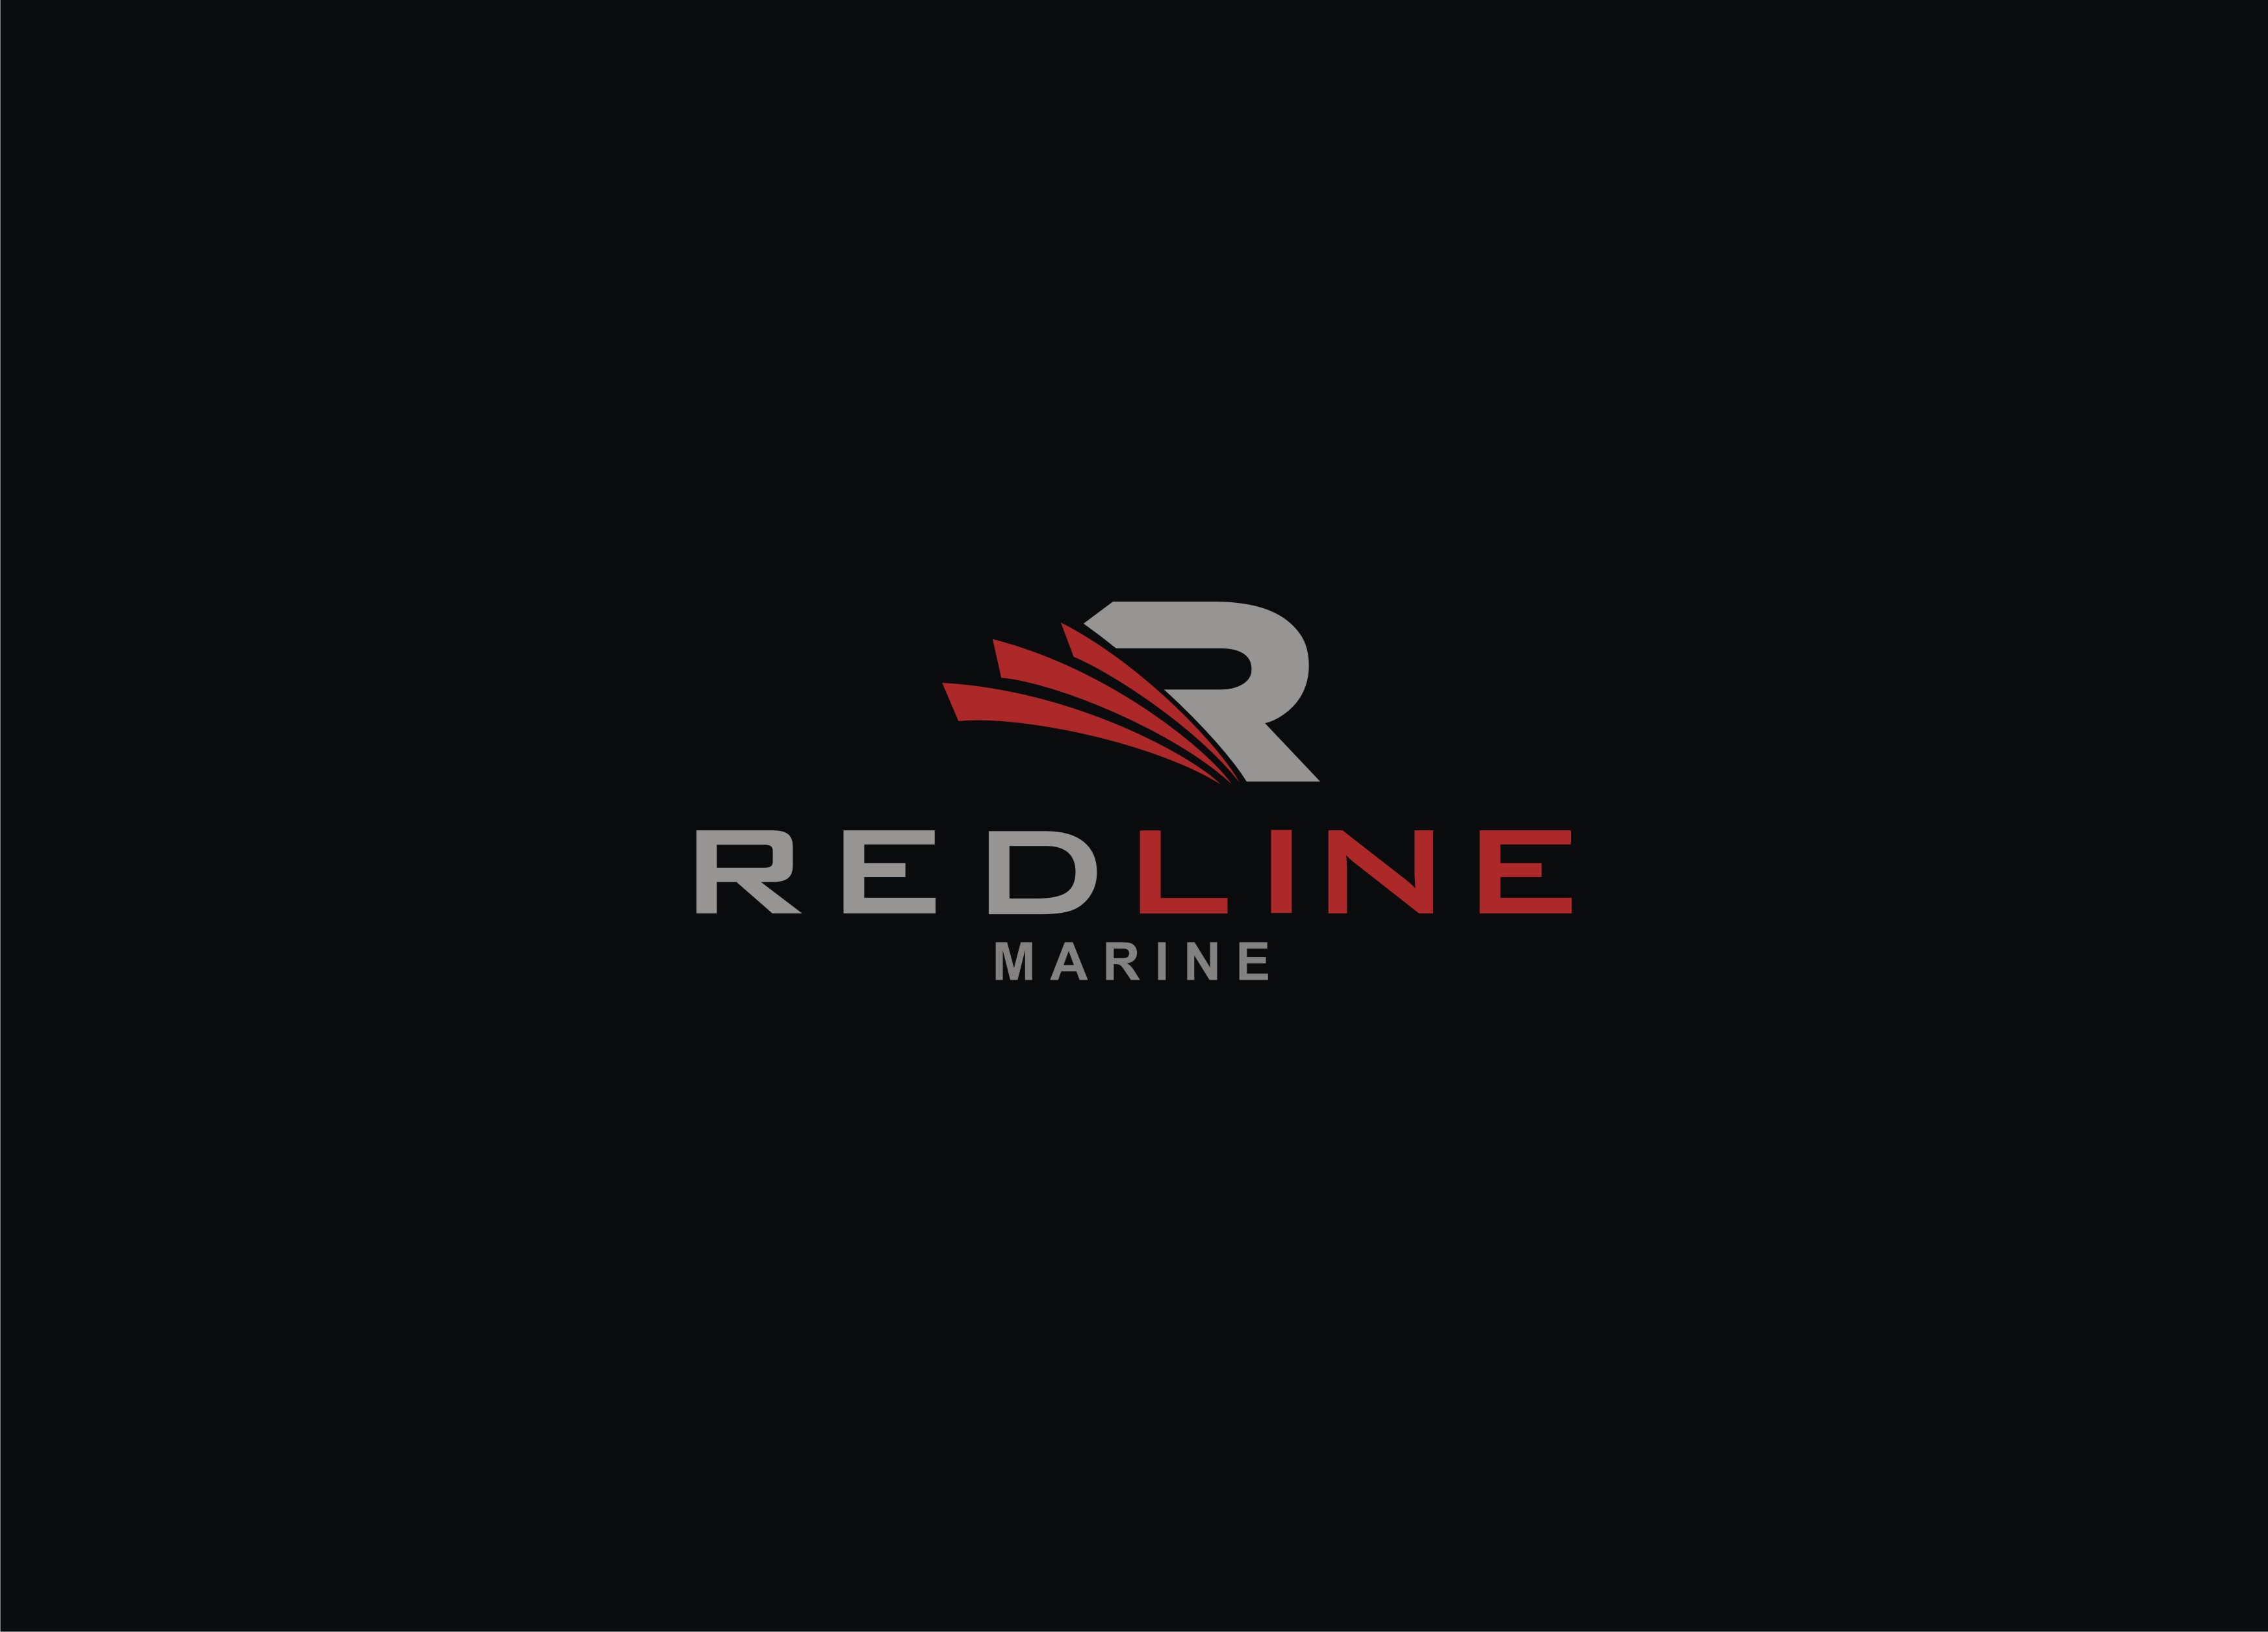 Redline Marine